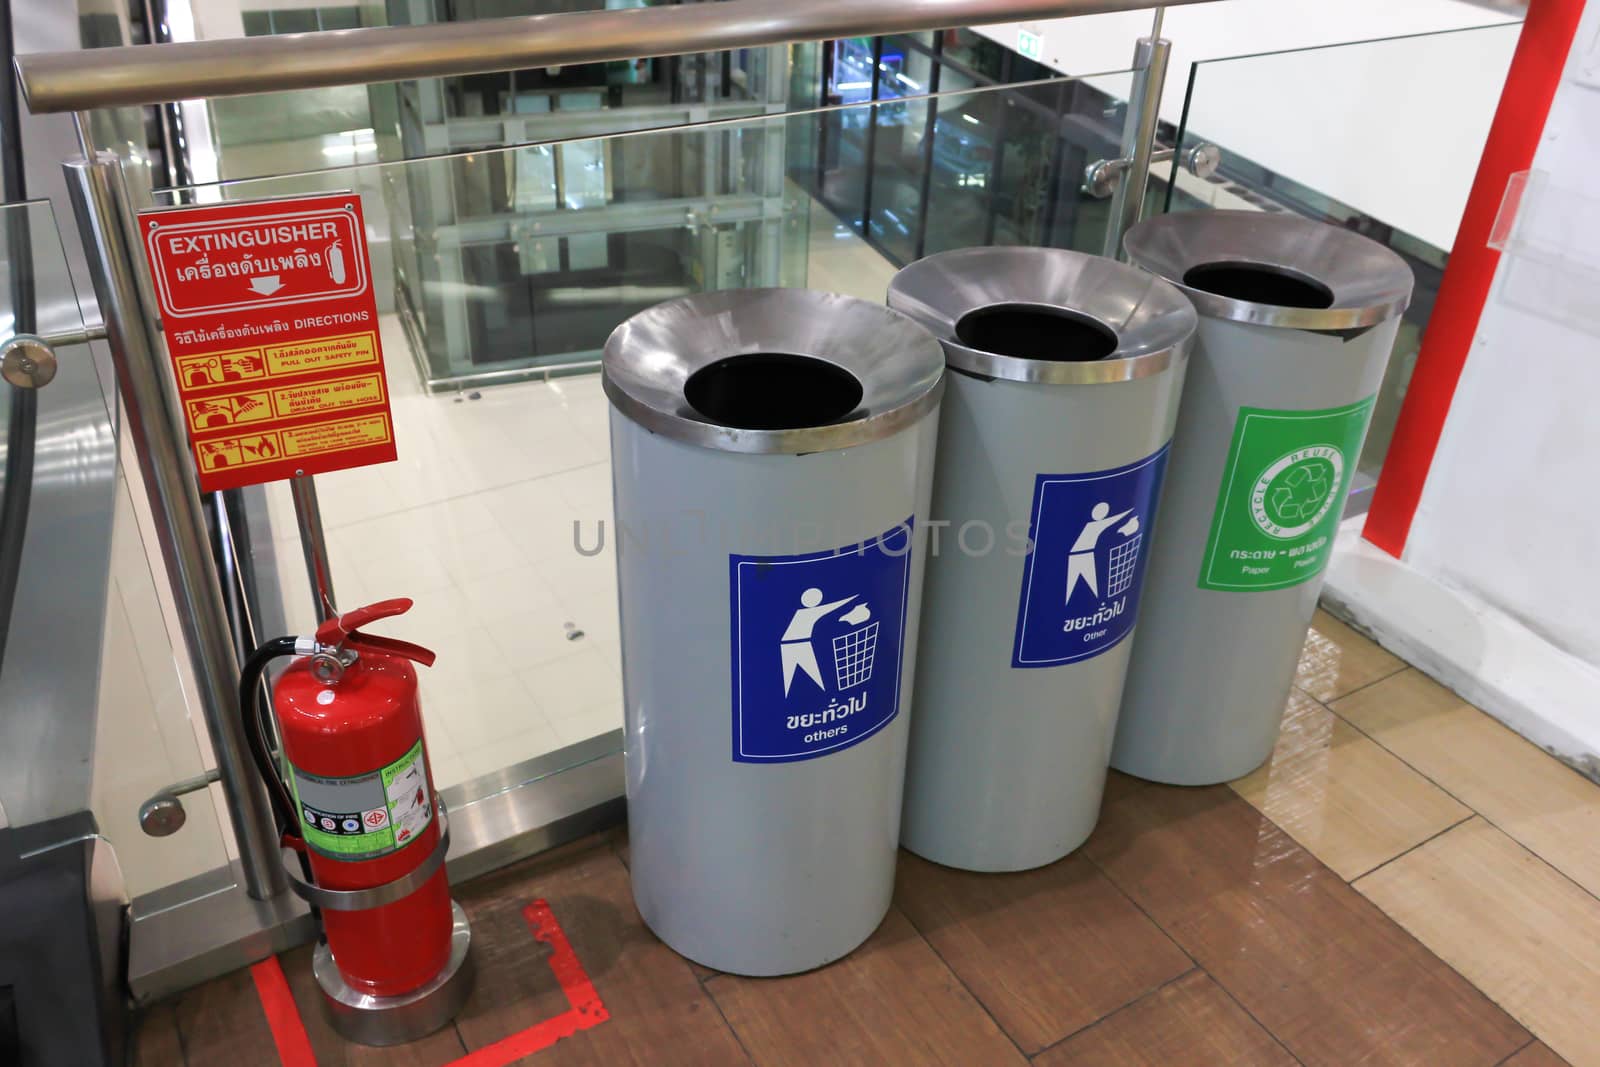 Three bins in shopping mall by shutterbird